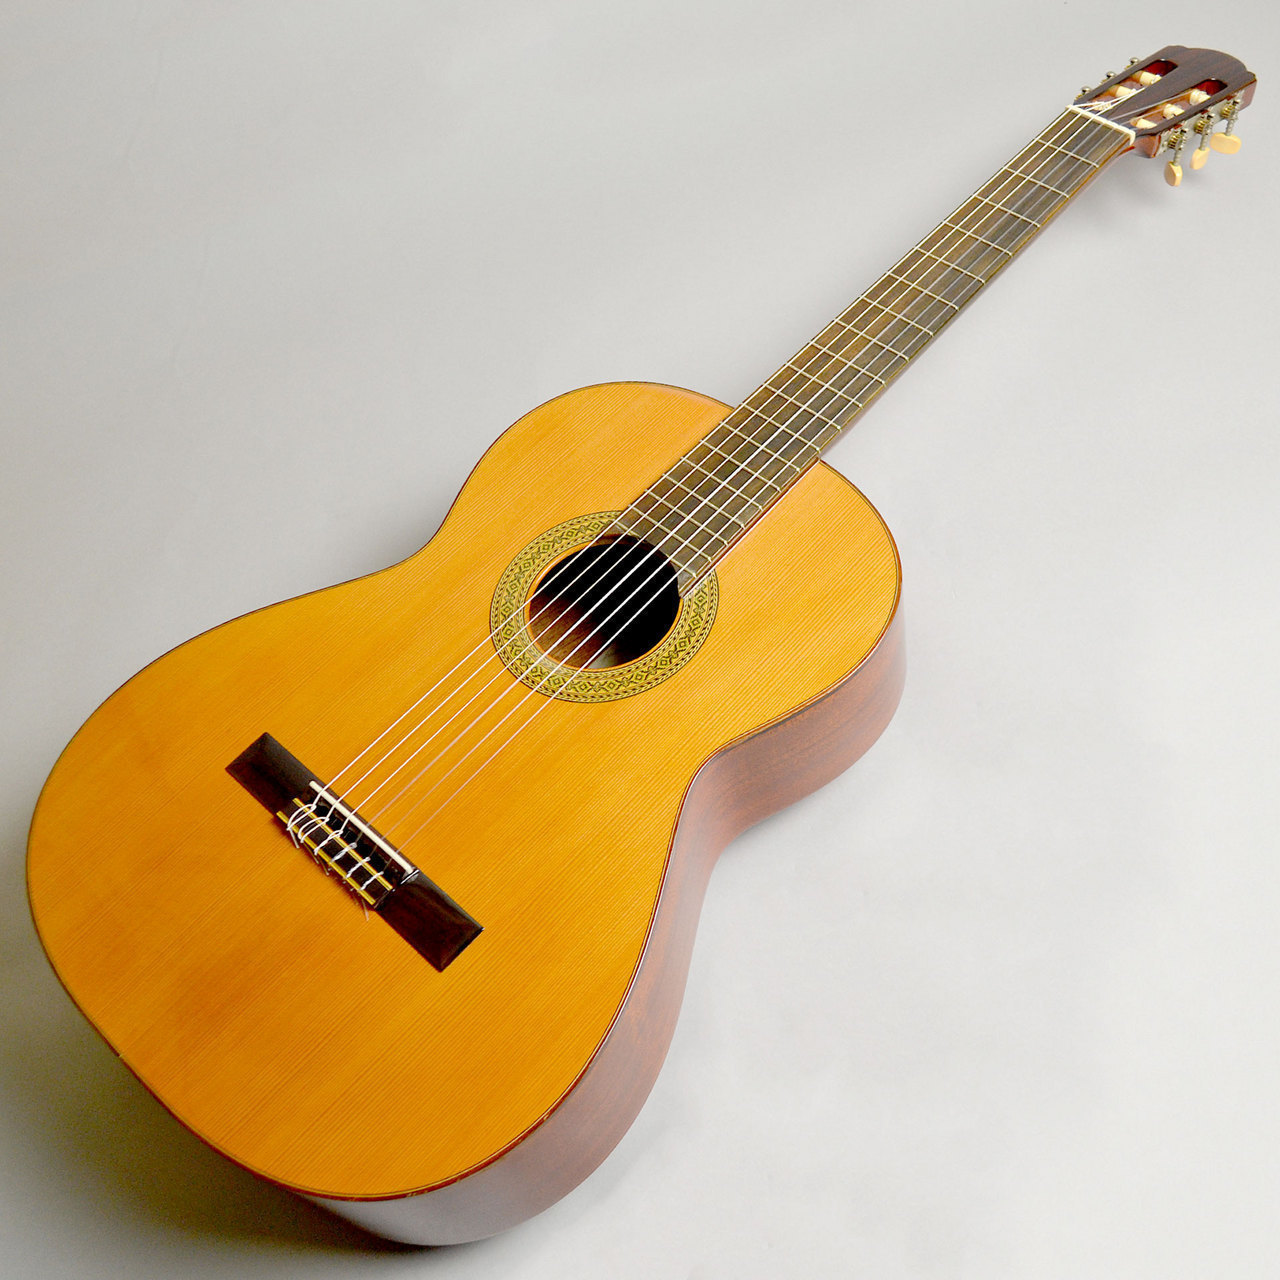 Manuel Santos スペイン製マヌエルサントス クラシックギター - 弦楽器 